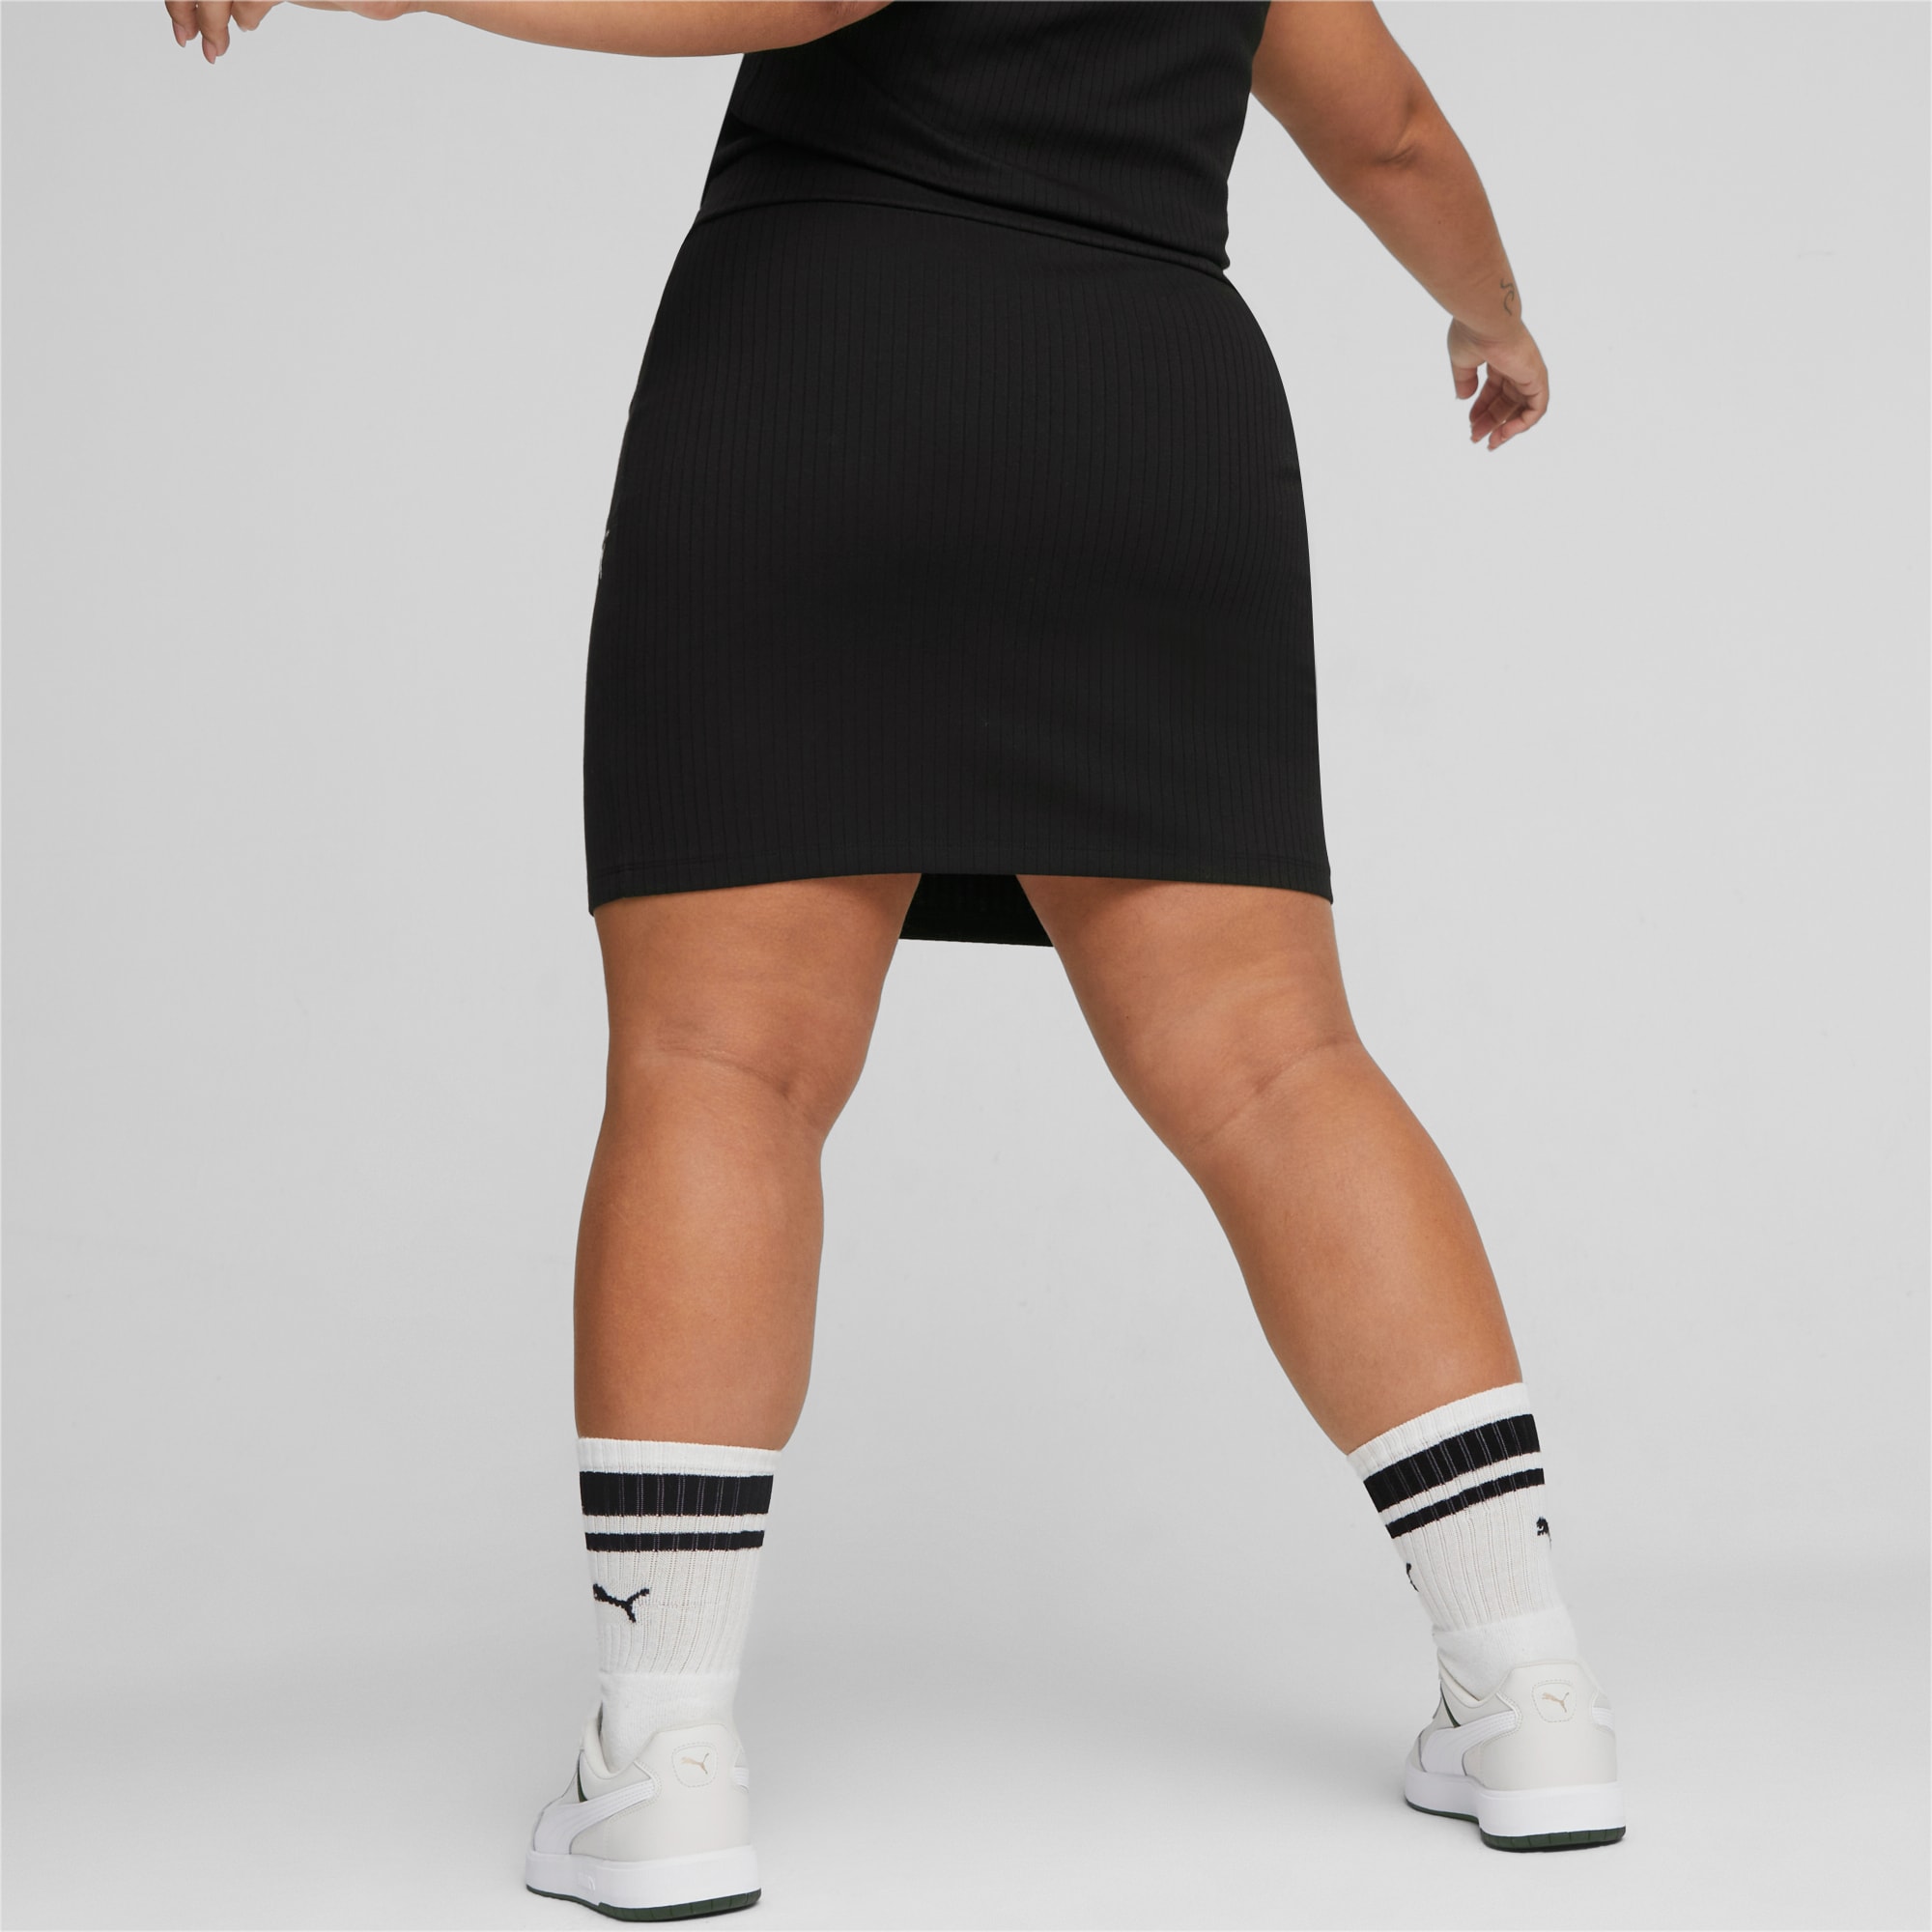 PUMA Classics Women's Ribbed Skirt, Black, Size M, Clothing